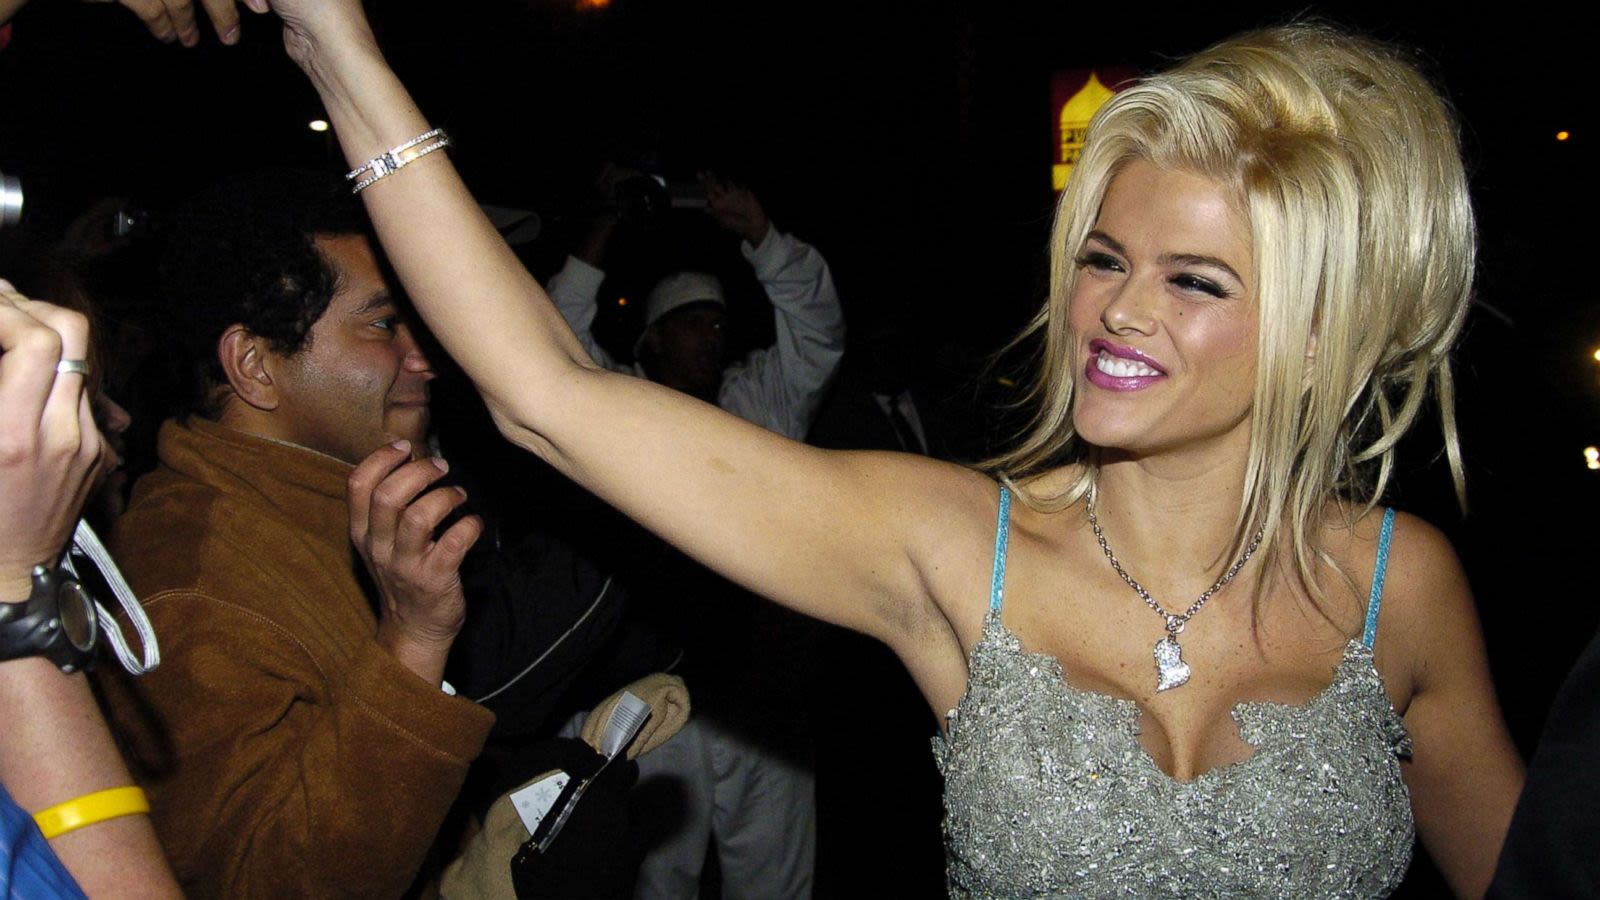 When cameras were off, Anna Nicole Smith was still Vicki Lynn, friends say